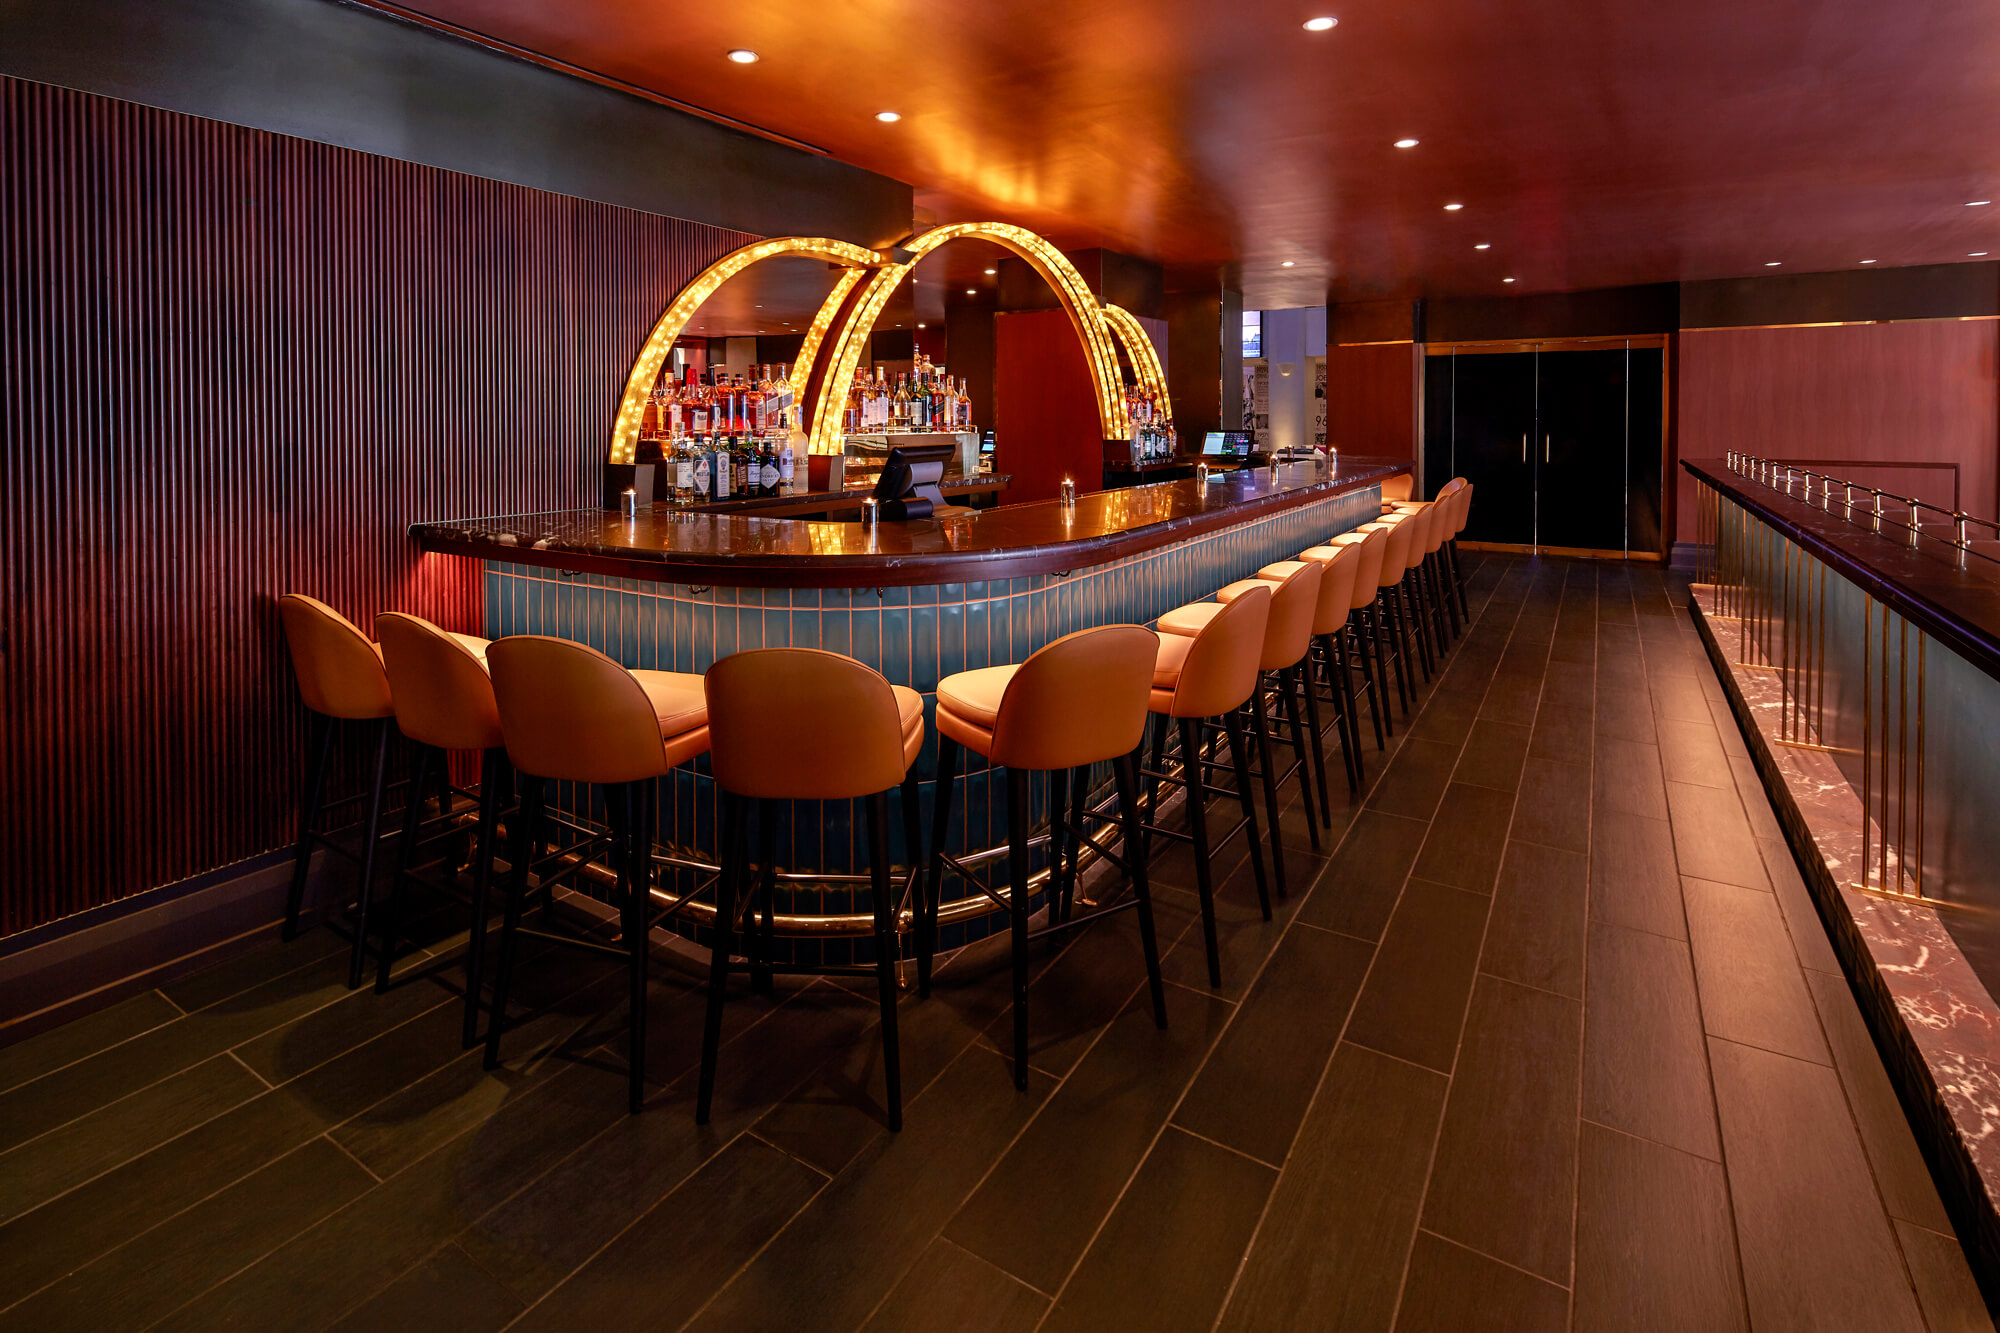 The Stayton Room bar inside the Lexington Hotel in New York City